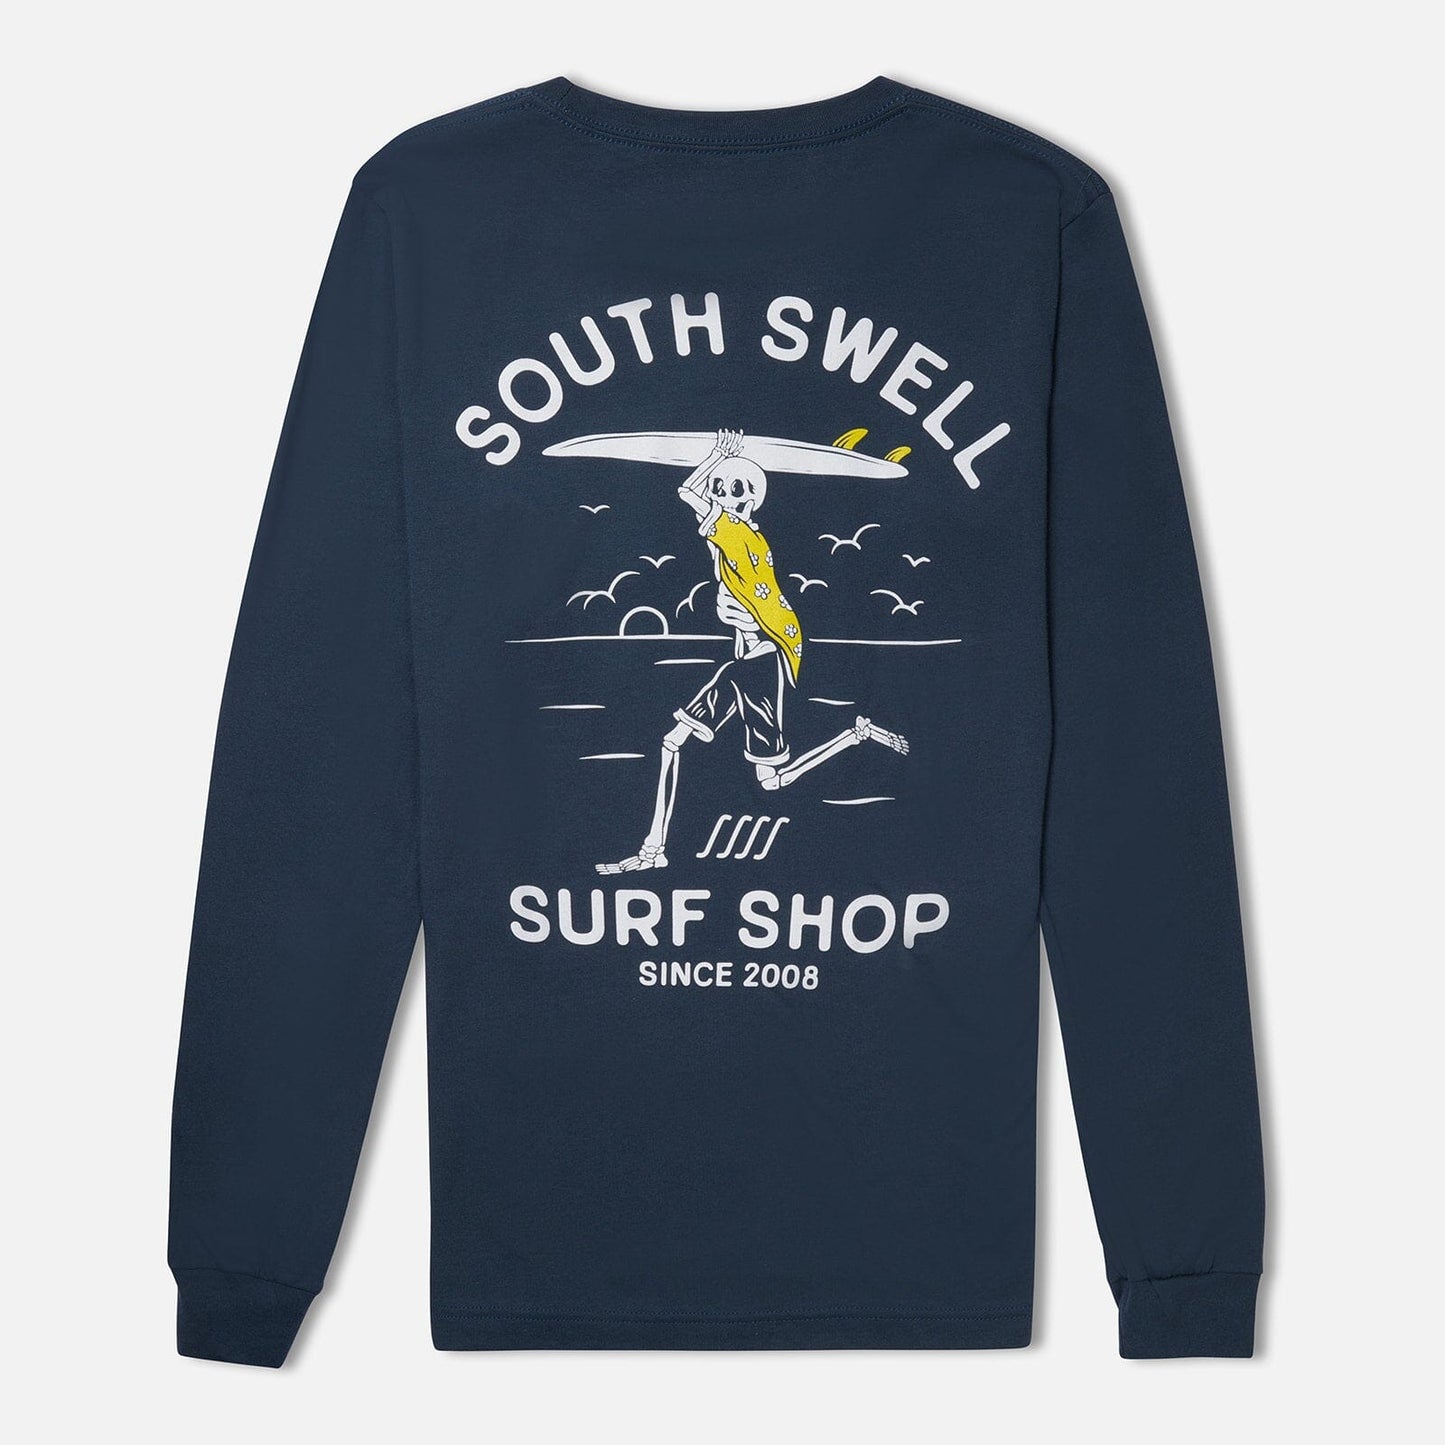 South Swell Shred Til Dead Longsleeve M Longsleeve Tee SOUTH SWELL S Vintage Navy 